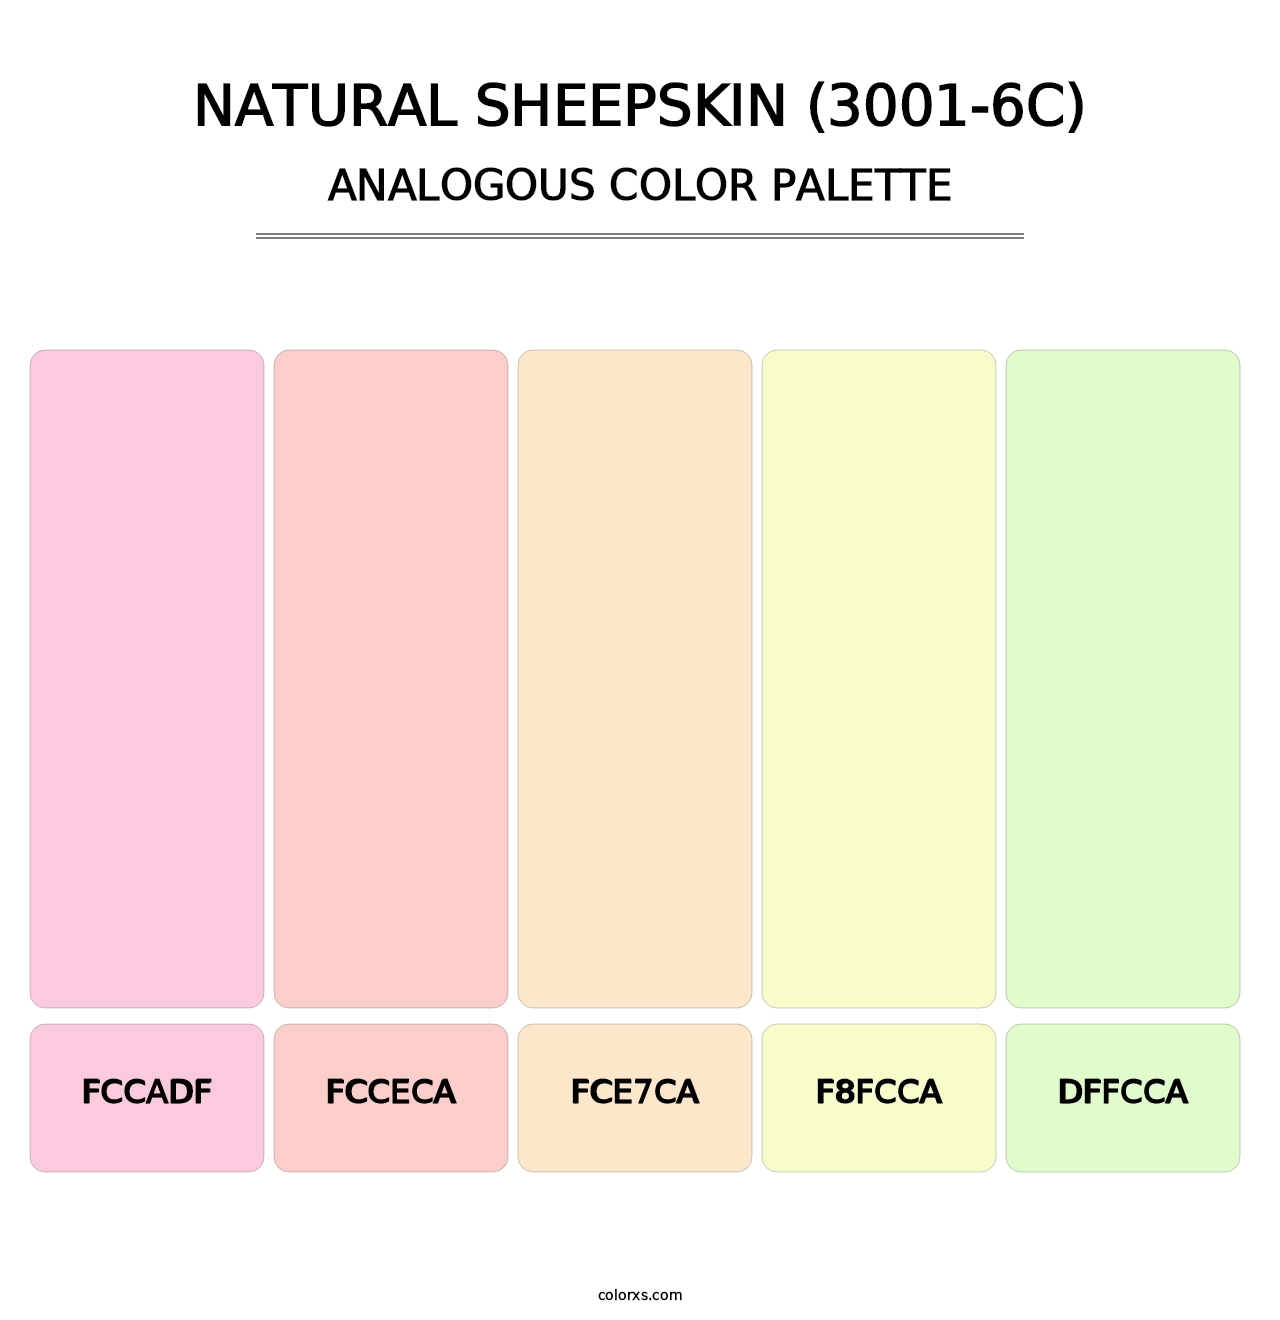 Natural Sheepskin (3001-6C) - Analogous Color Palette